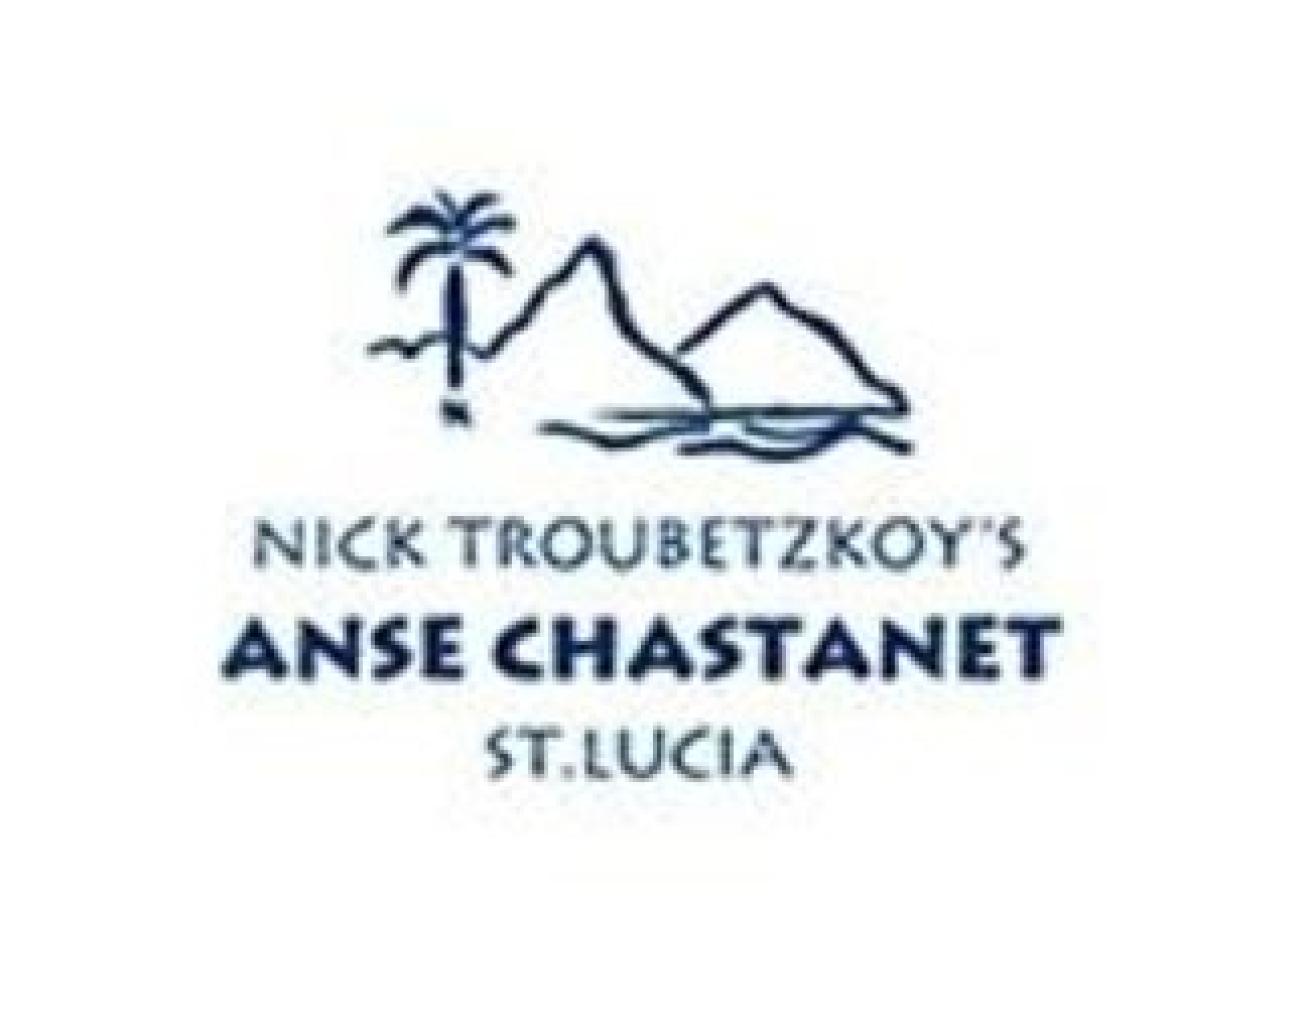 Anse Chastanet Resort